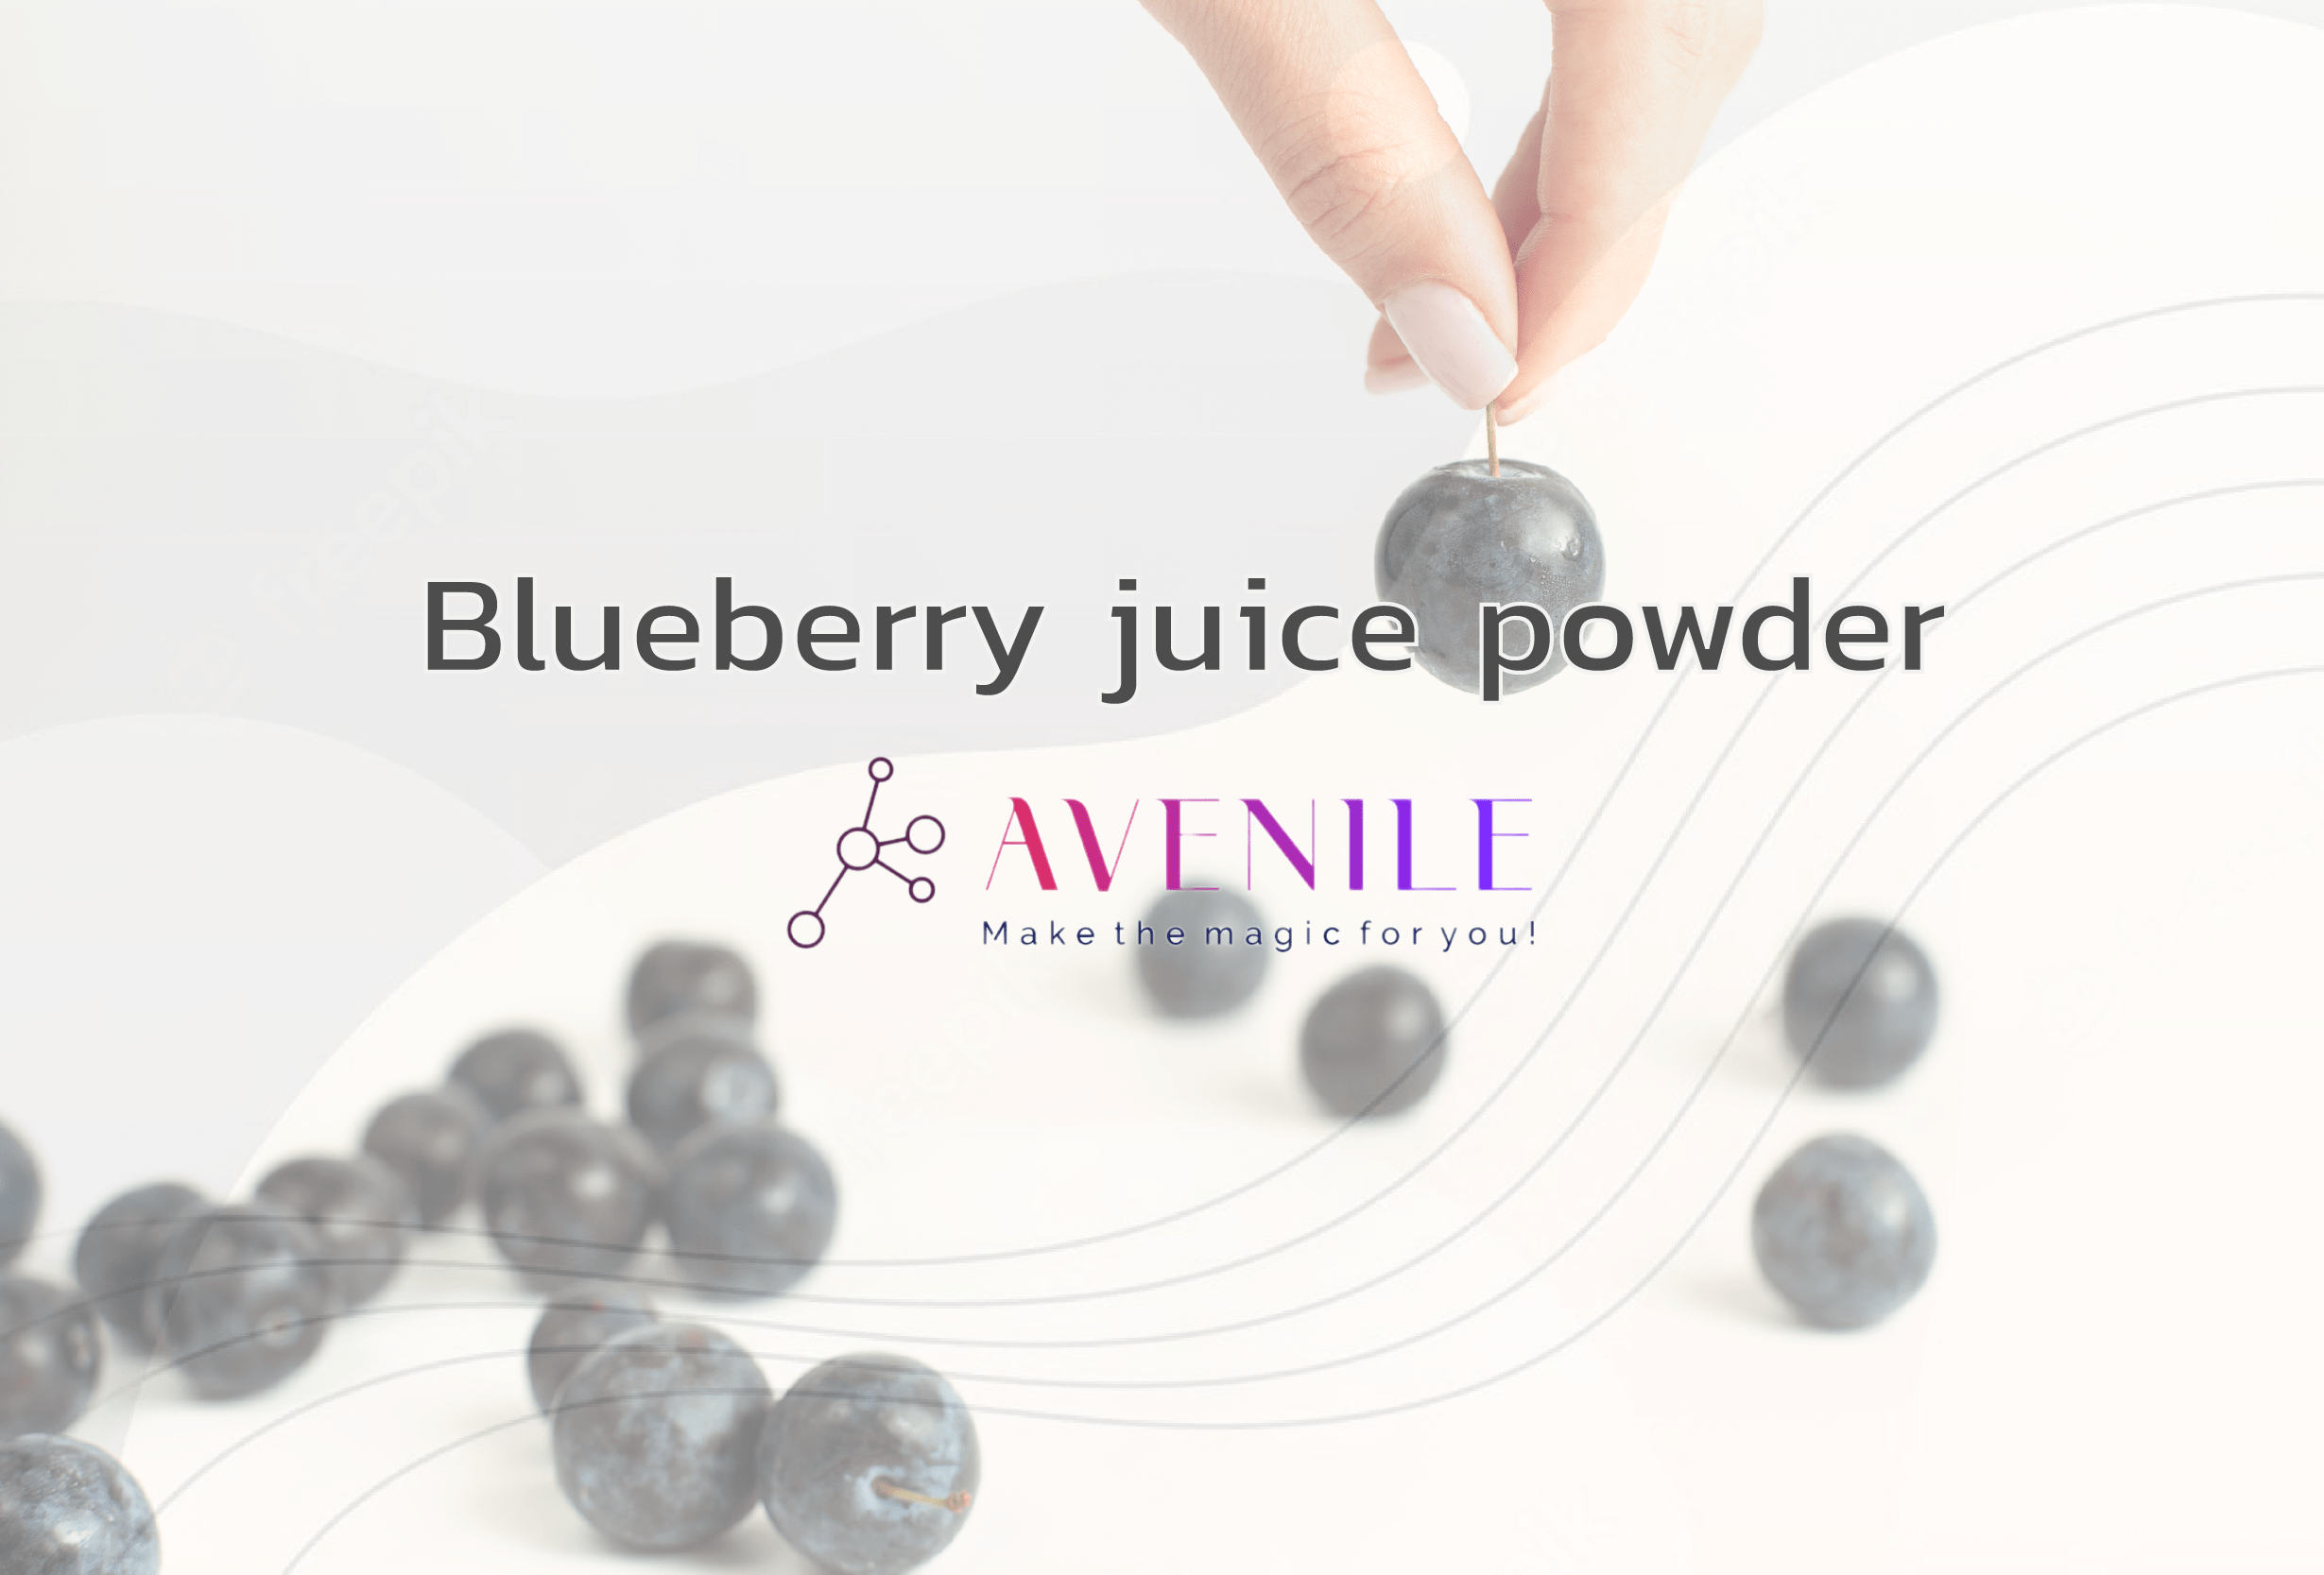 Blueberry juice powder